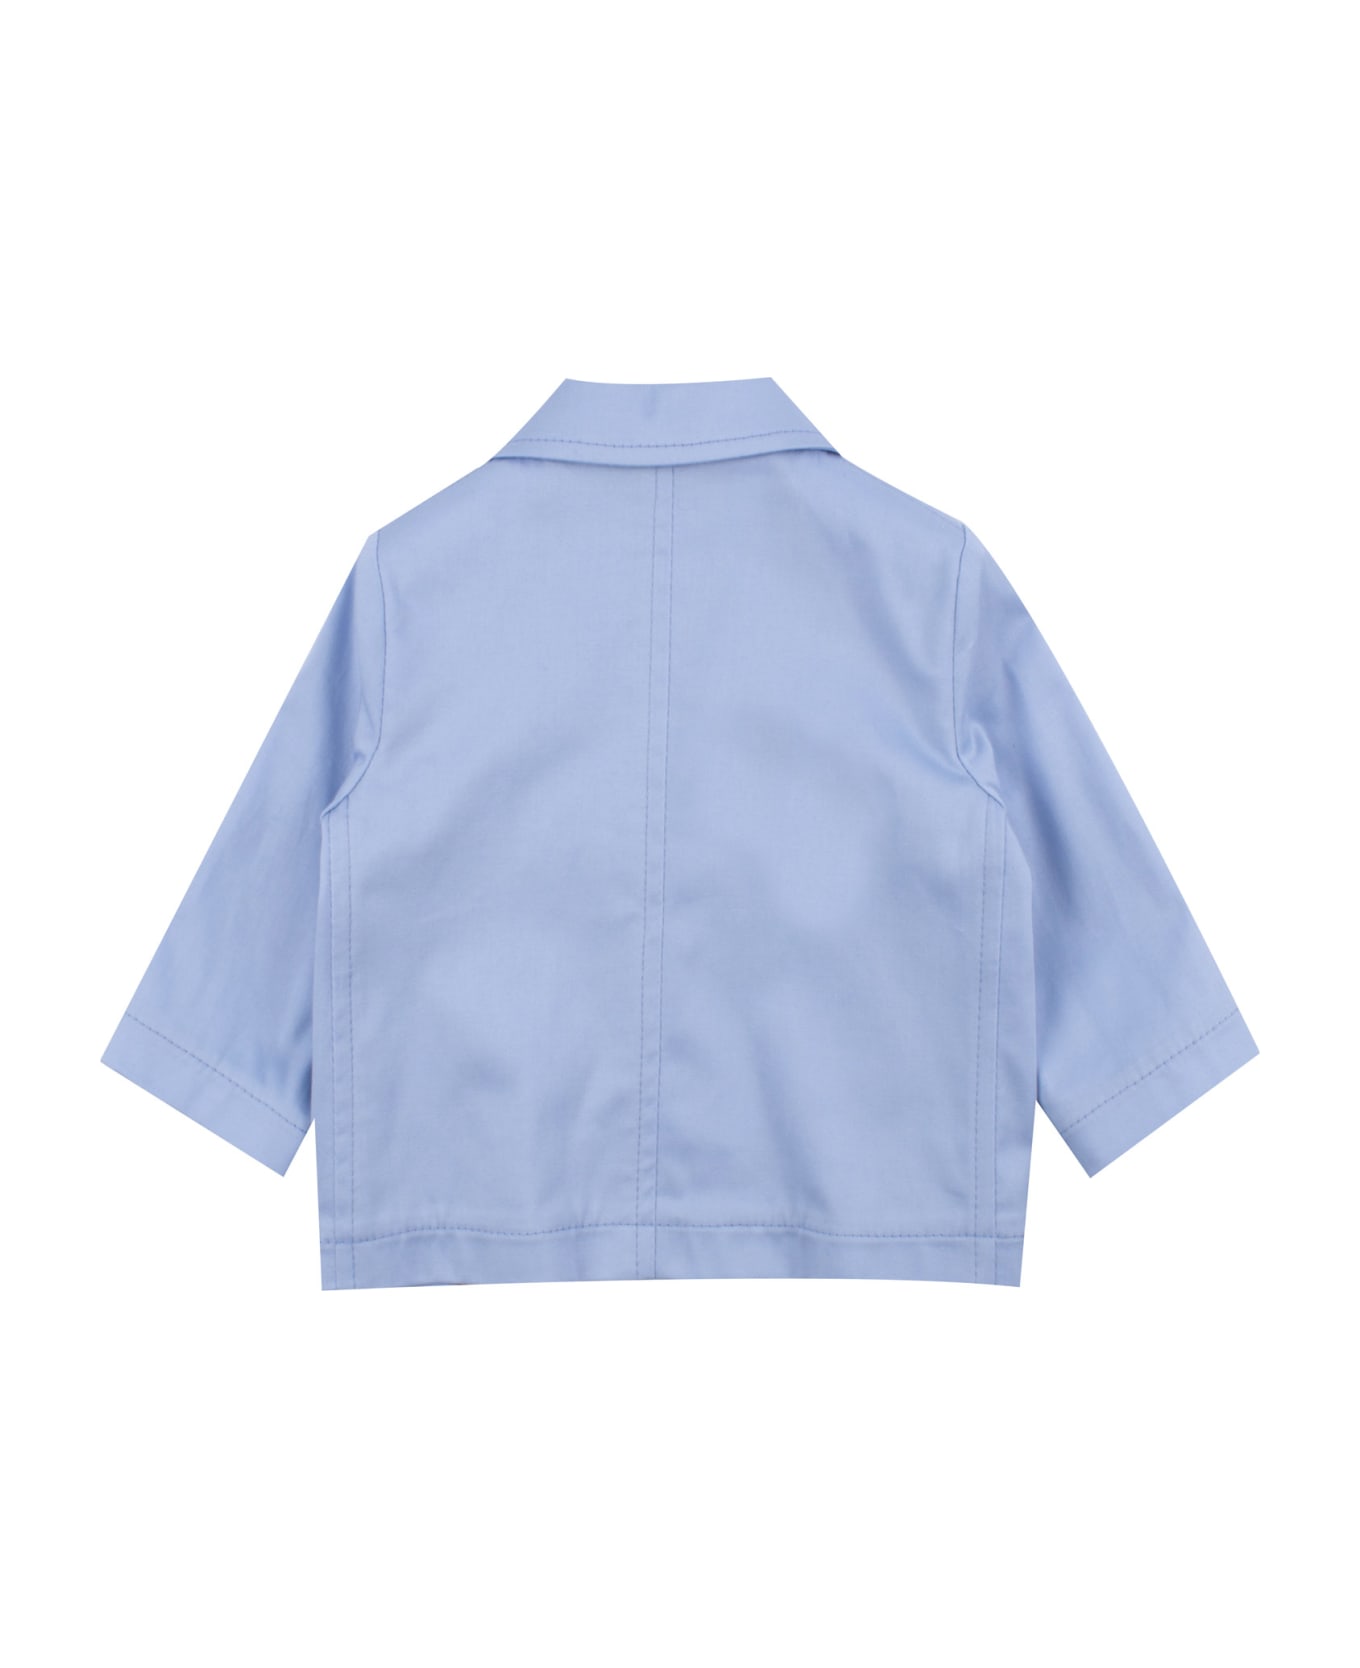 Manuel Ritz Cotton Jacket - Light blue